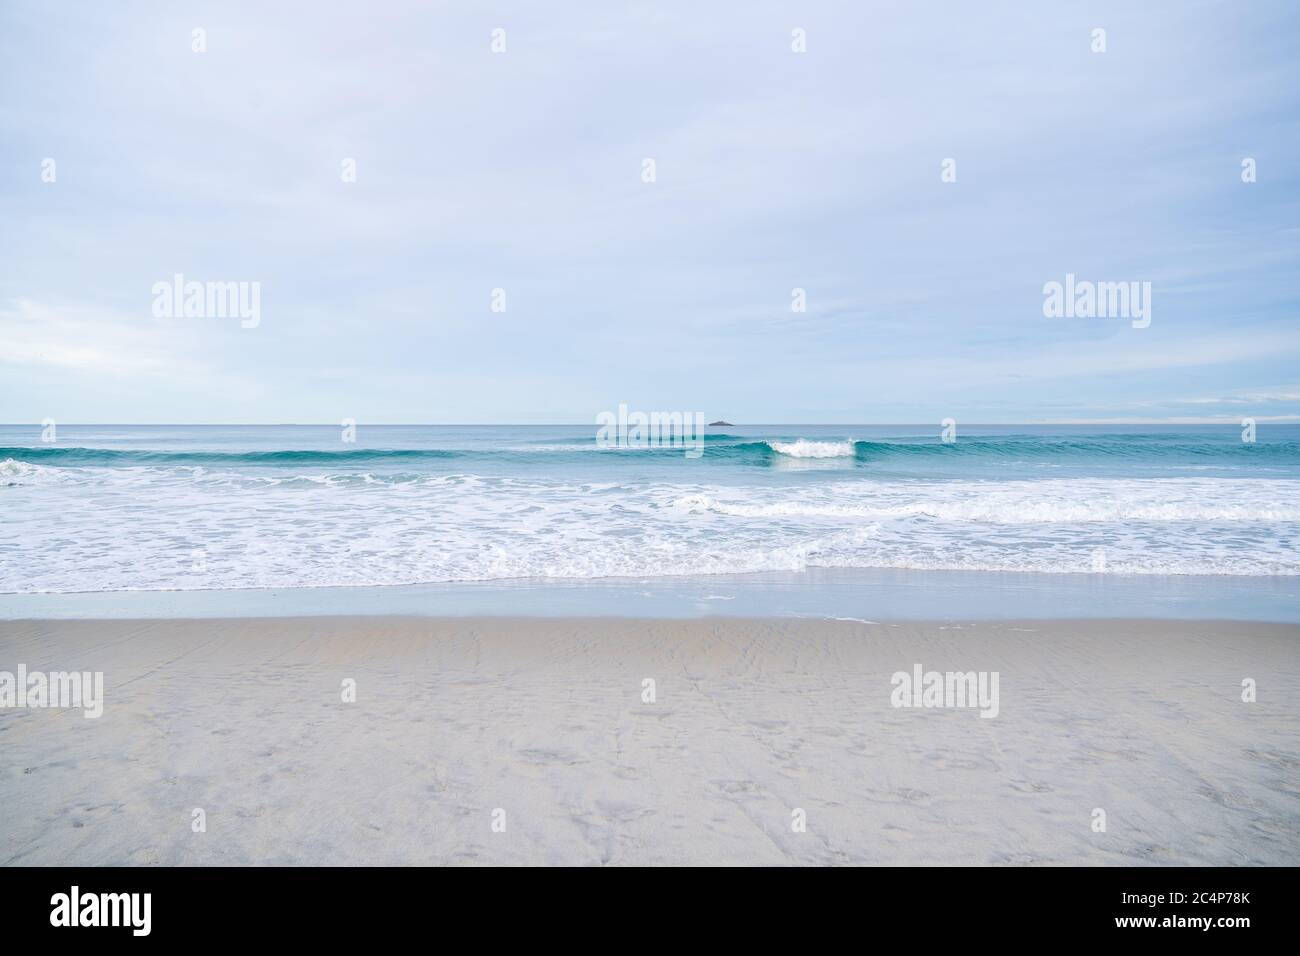 Soft blue ocean wave on sandy beach. Background textured. Stock Photo